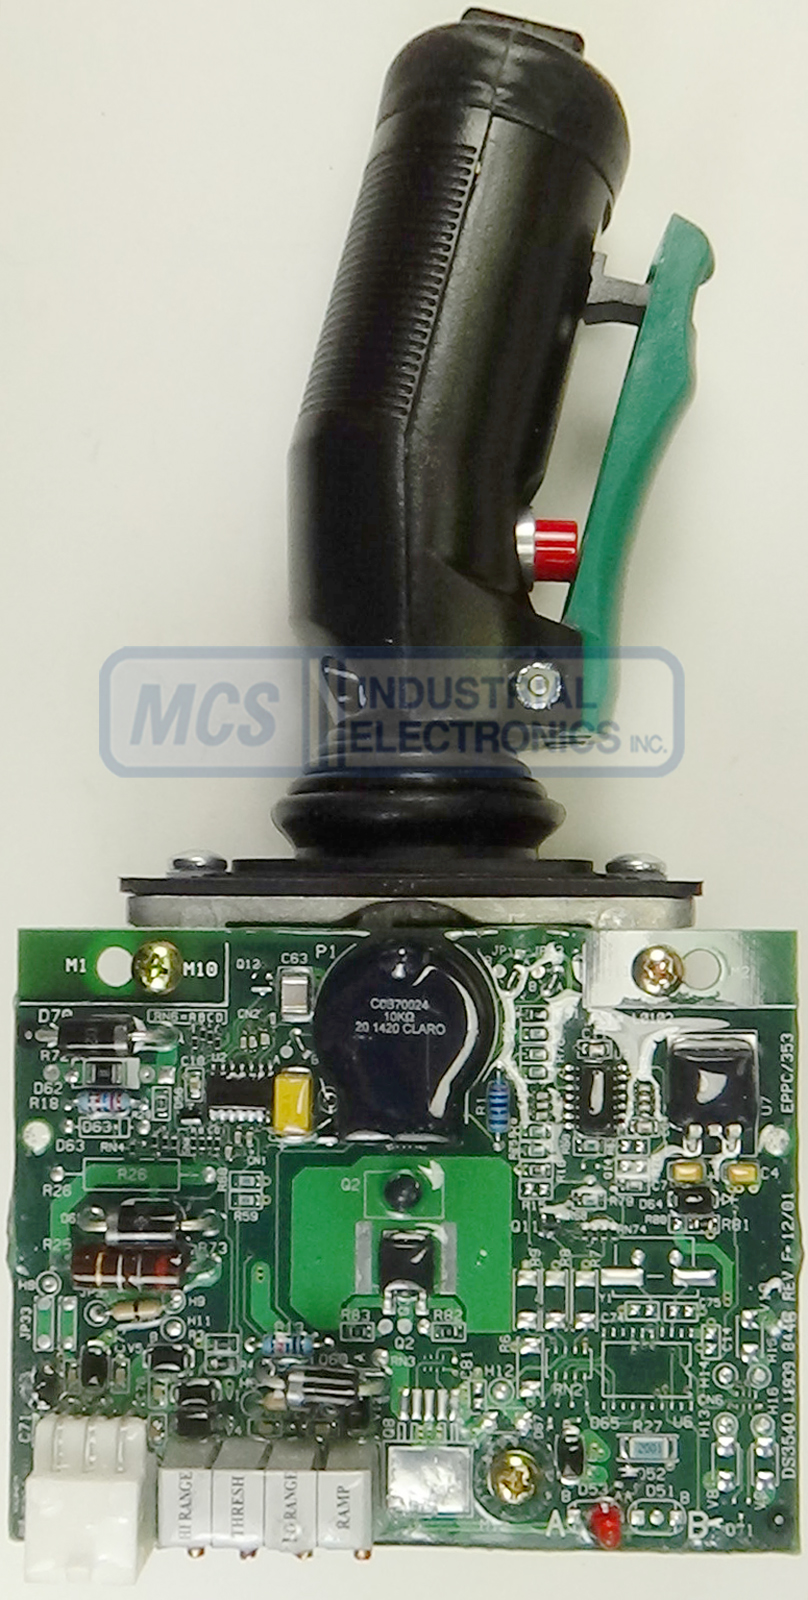 Grove Joystick Controller 9352100750 MCS Industrial